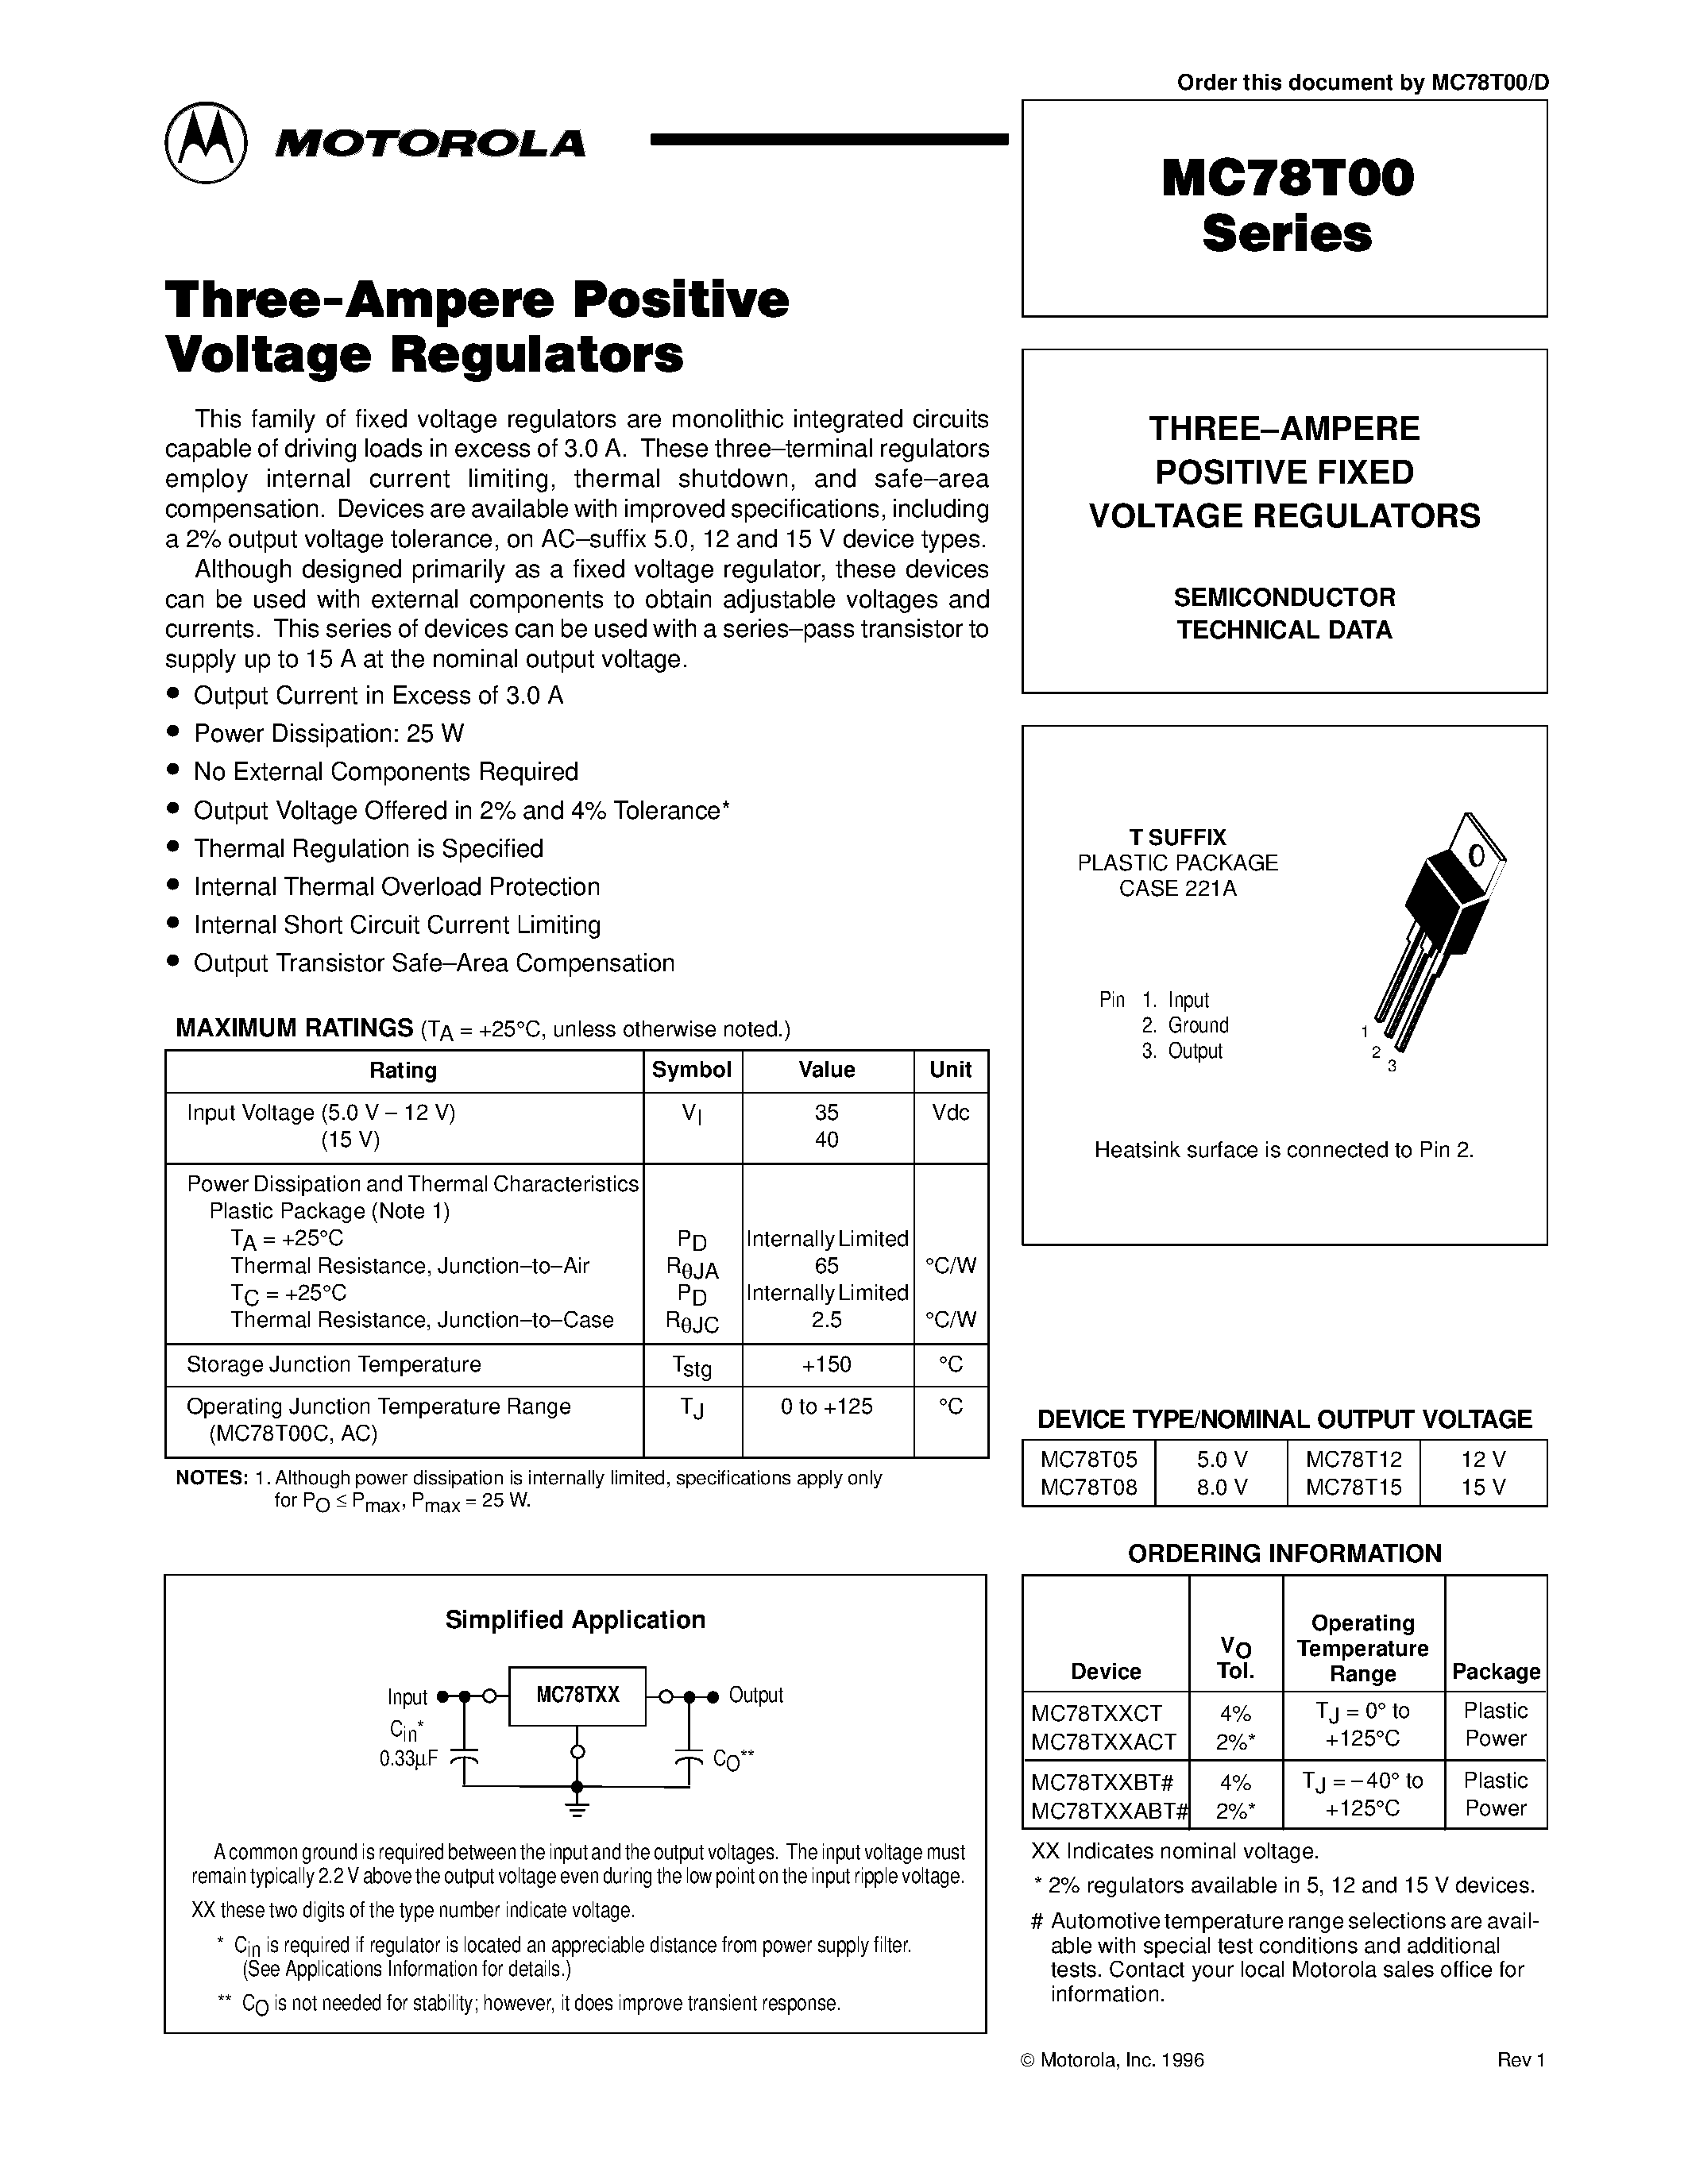 Datasheet MC78T15C - THREE-AMPERE POSITIVE FIXED VOLTAGE REGULATORS page 1